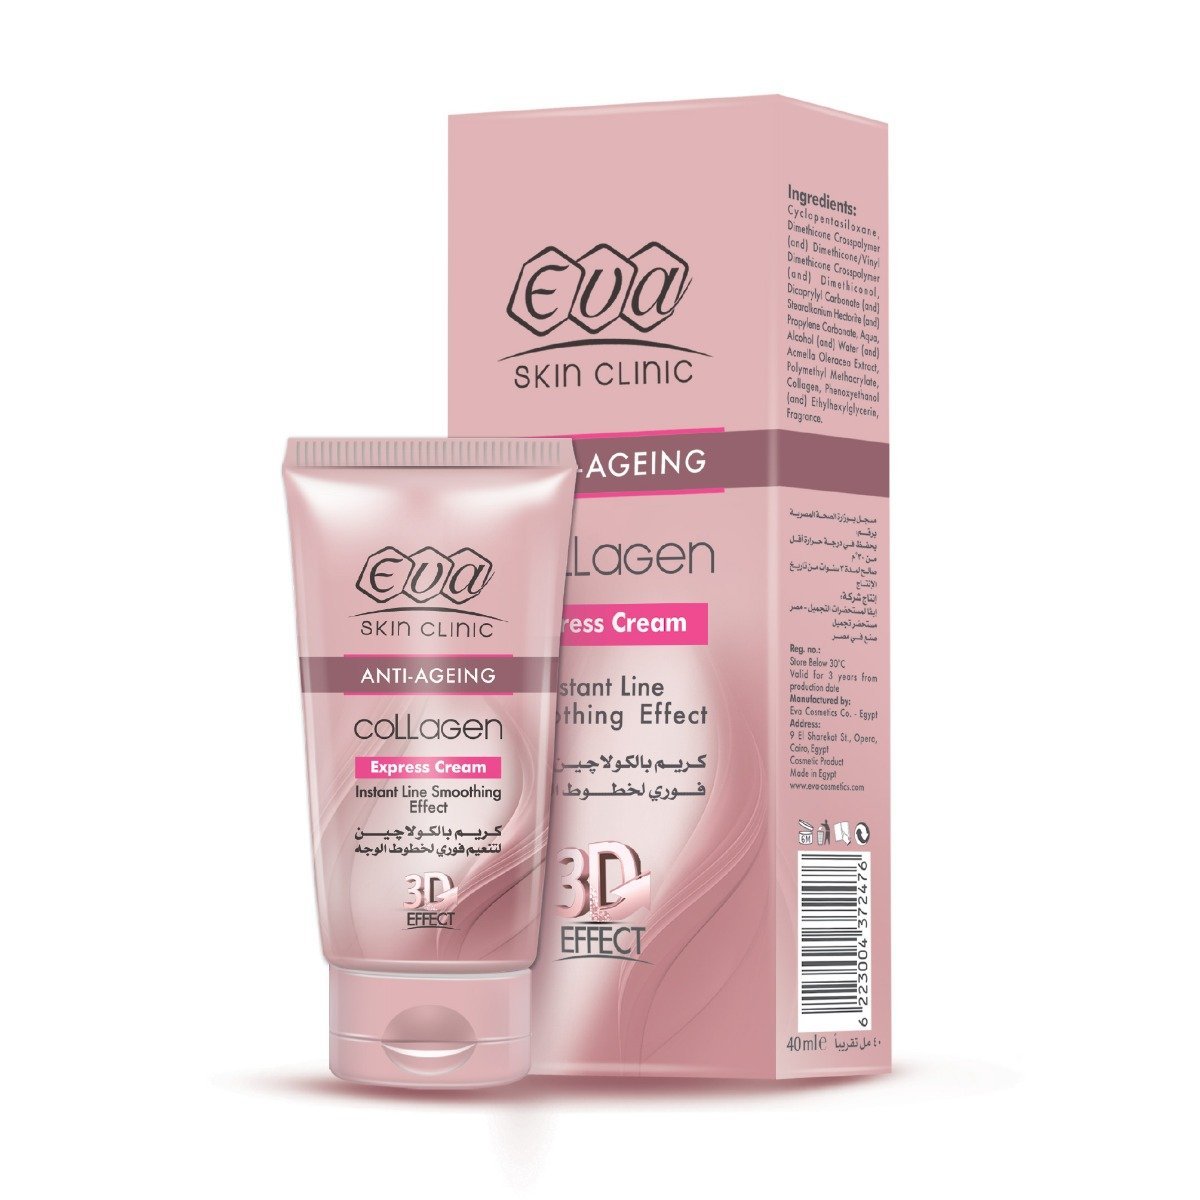 Eva Collagen Express Cream - 40ml - Bloom Pharmacy